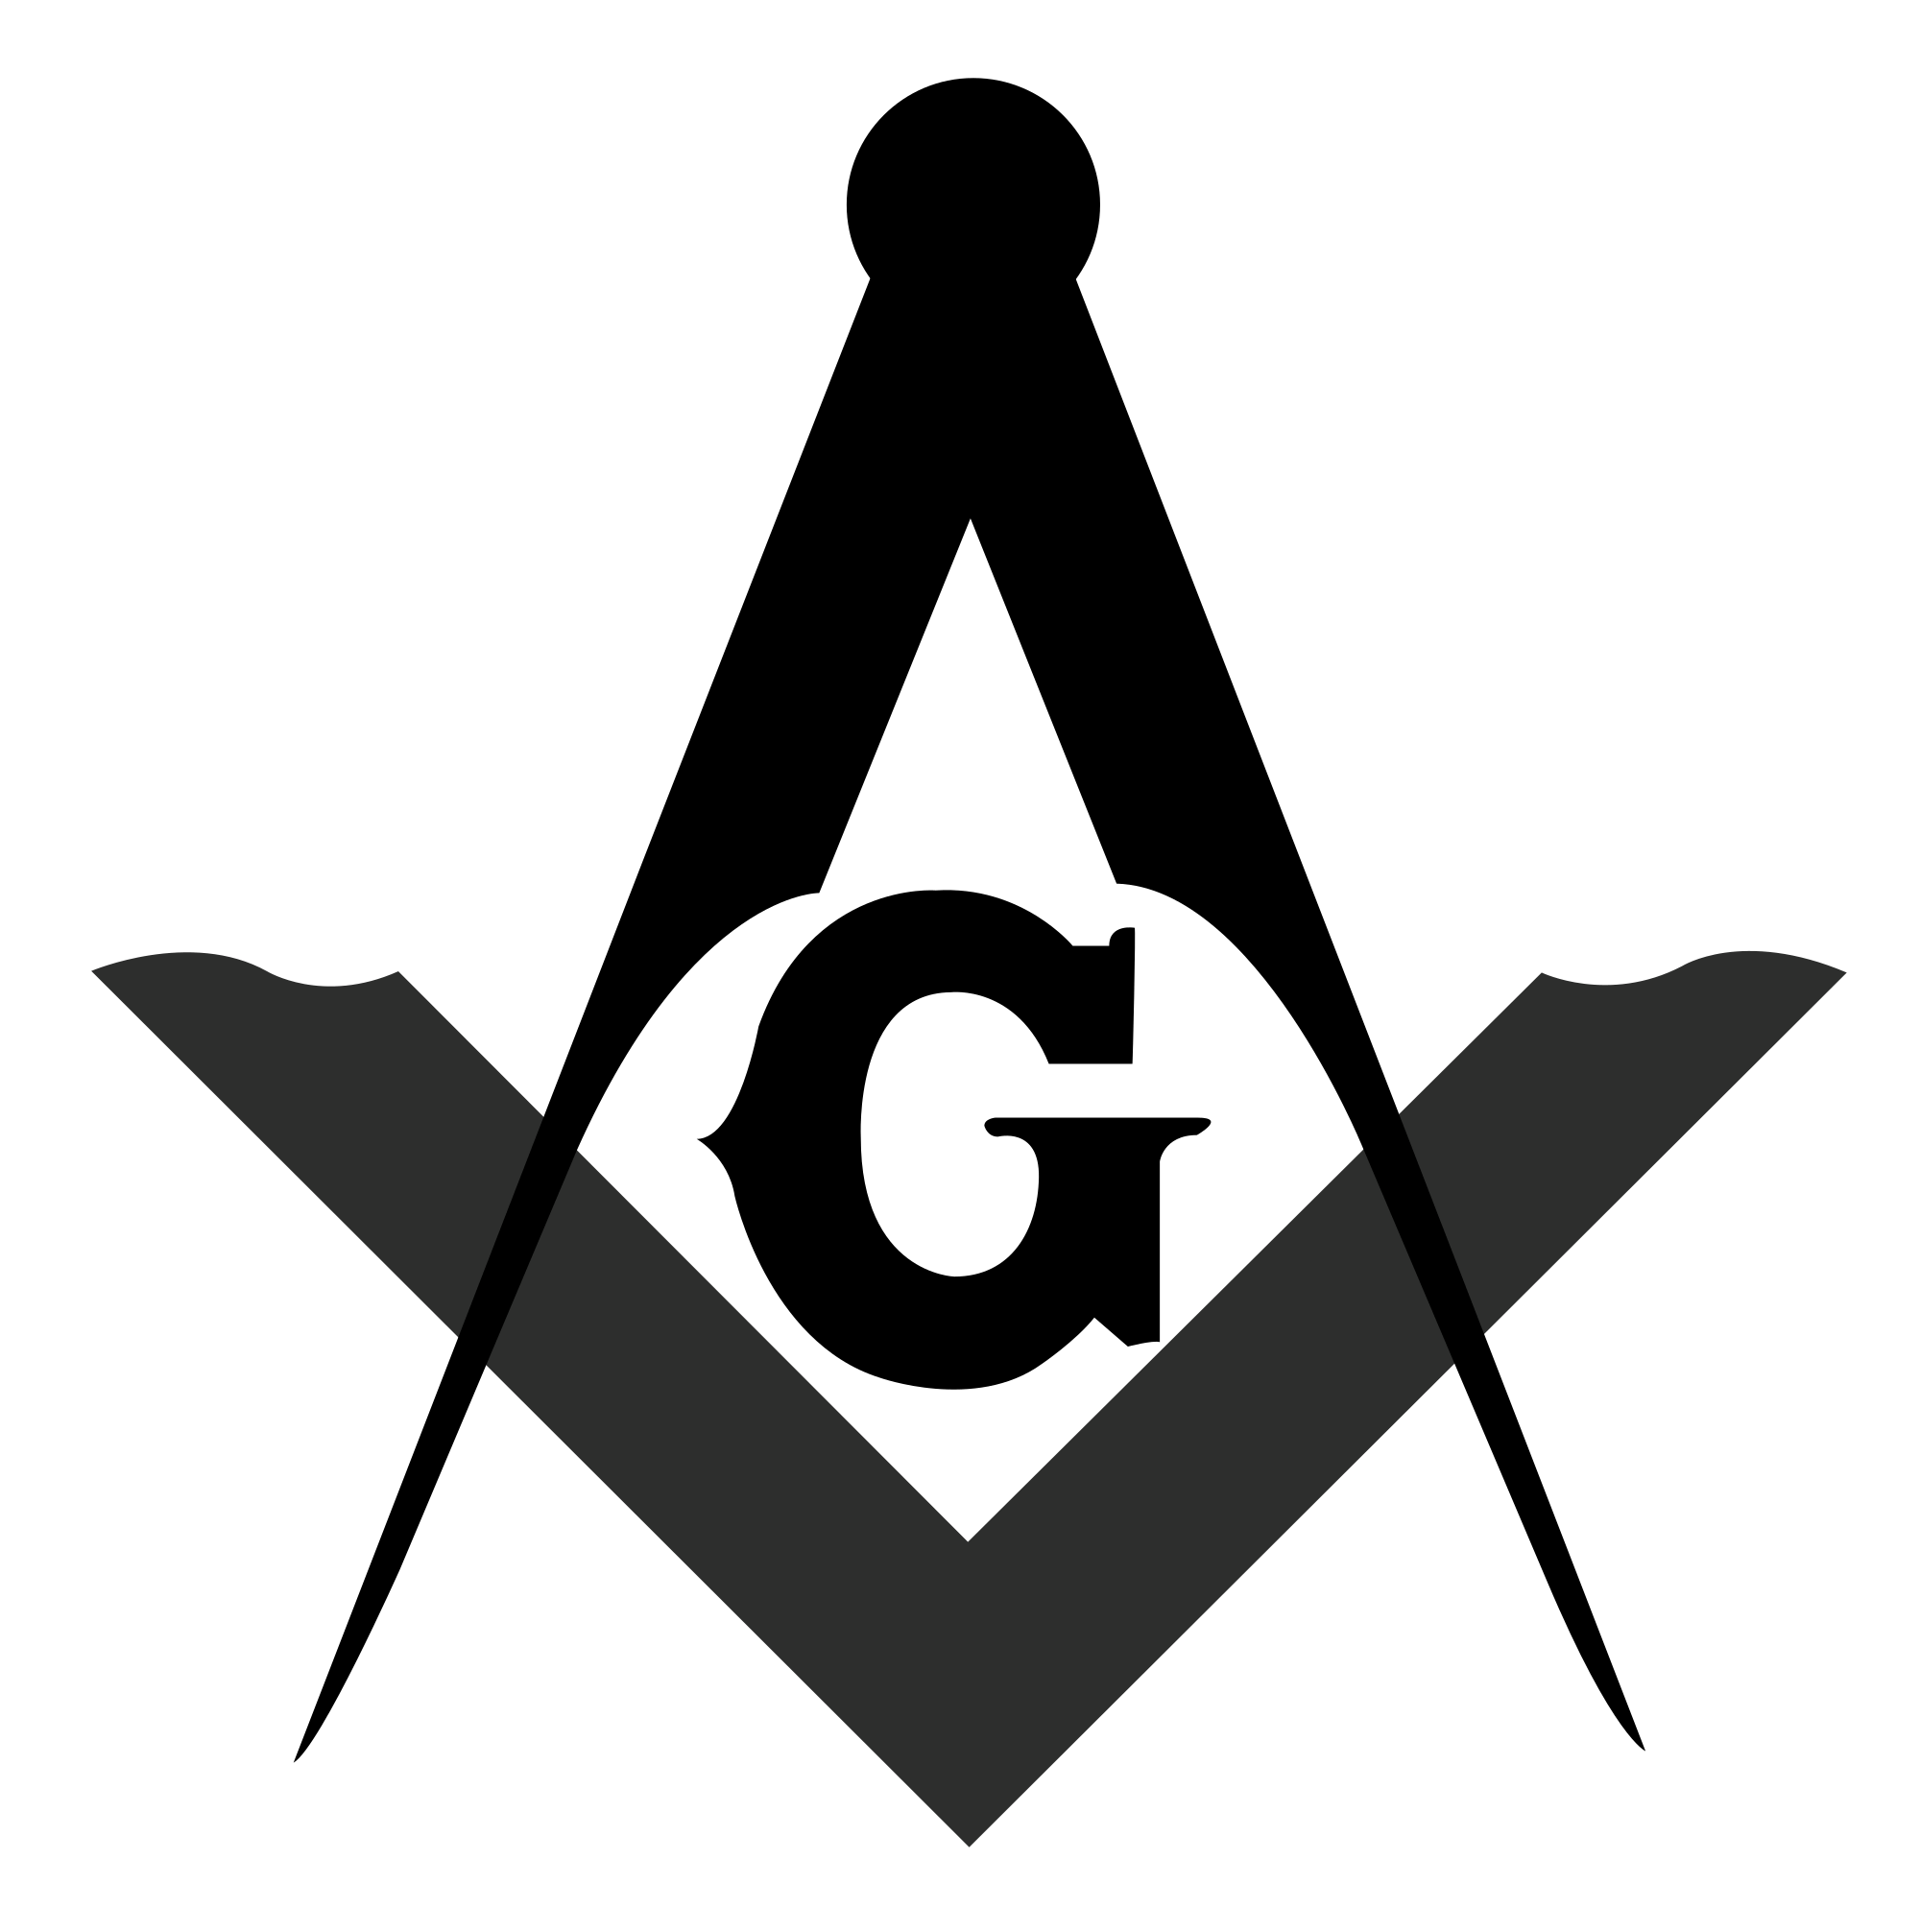 White G Inside Blue Square Logo - Square and Compasses